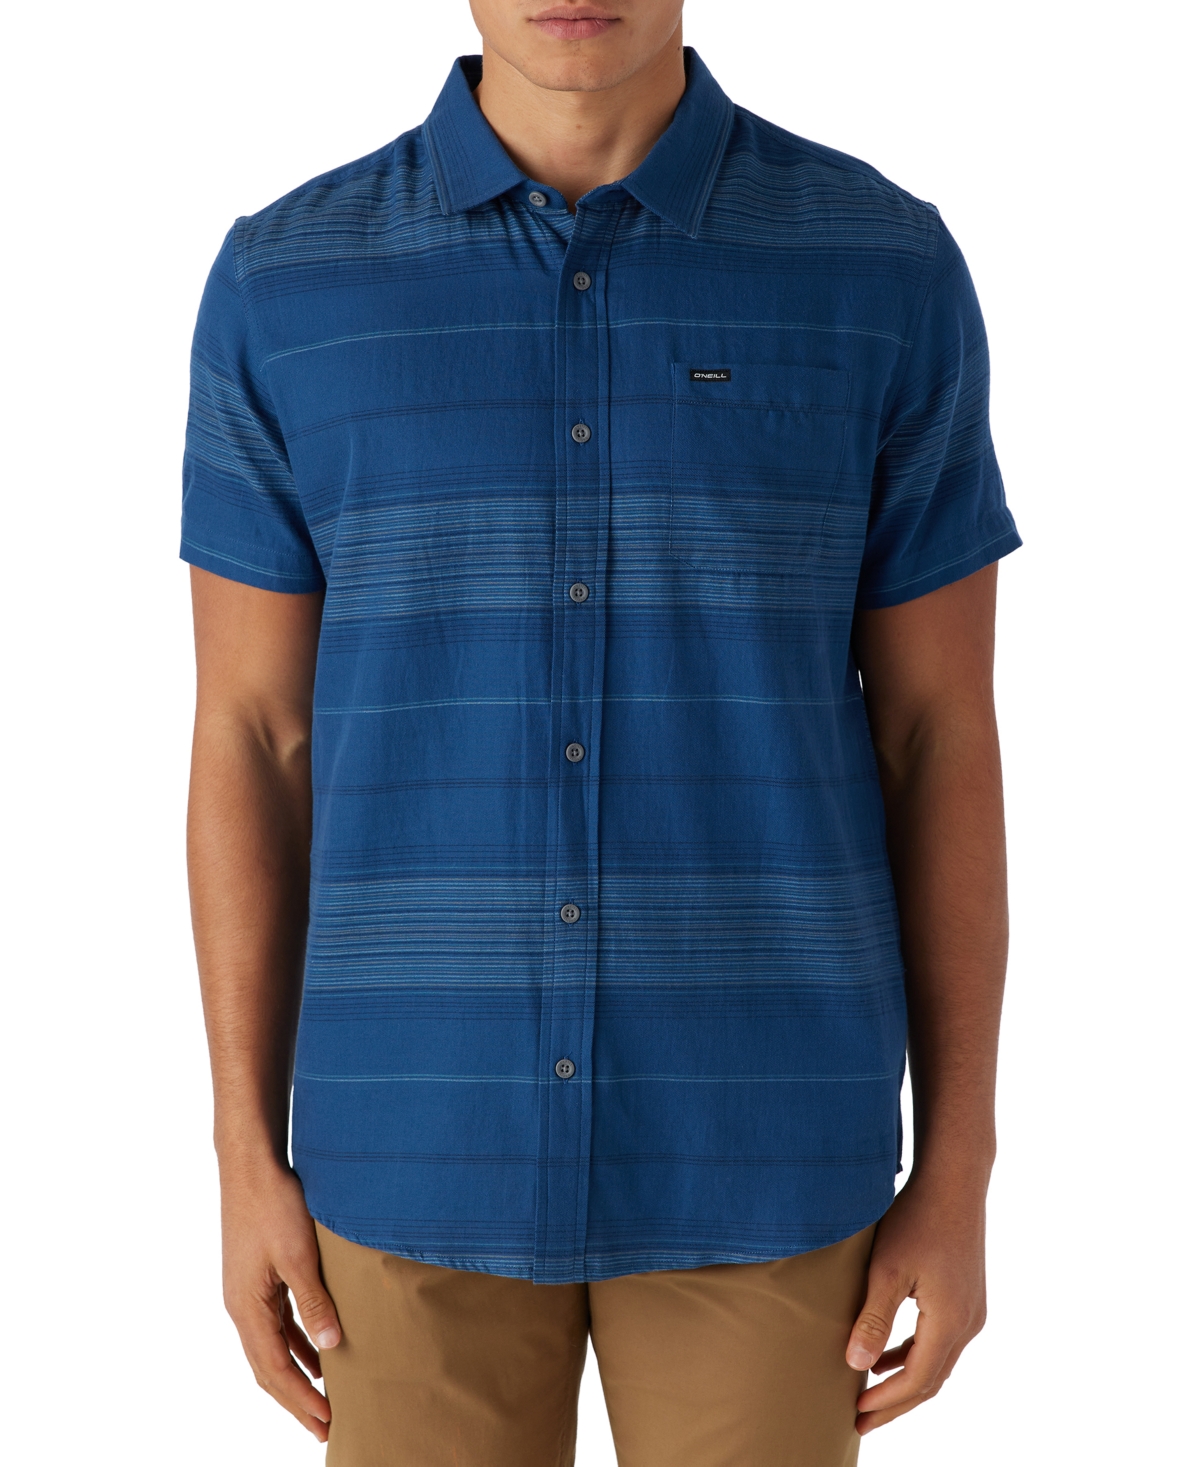 Seafaring Stripe Standard shirt - Indigo